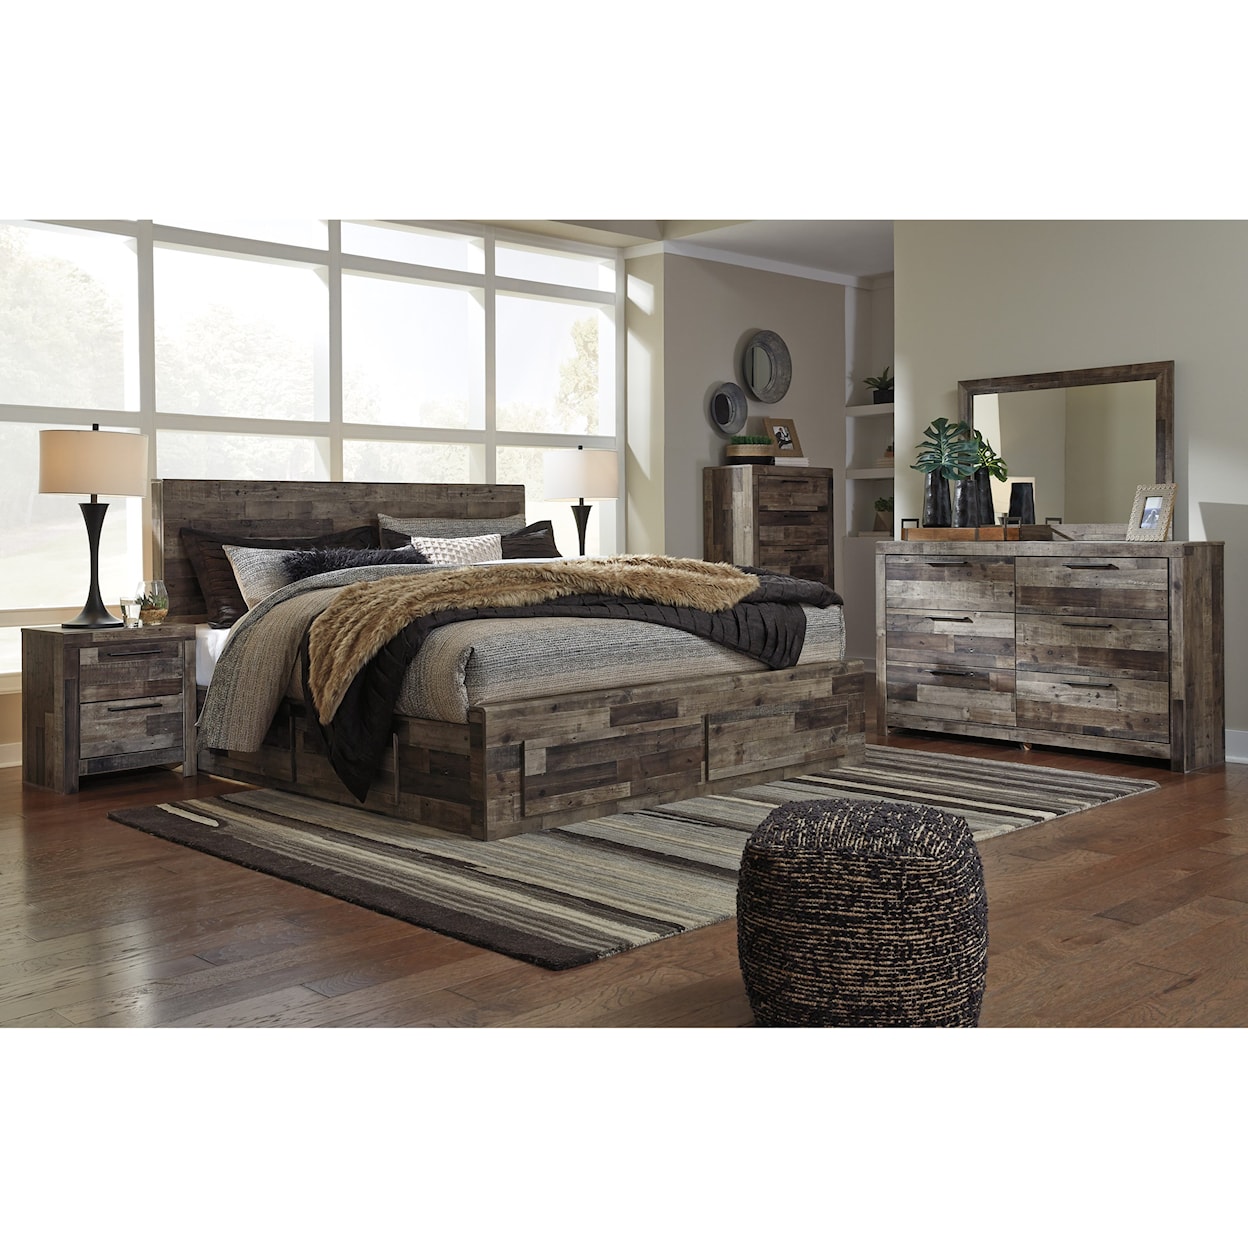 Ashley Furniture Benchcraft Derekson King Bedroom Group